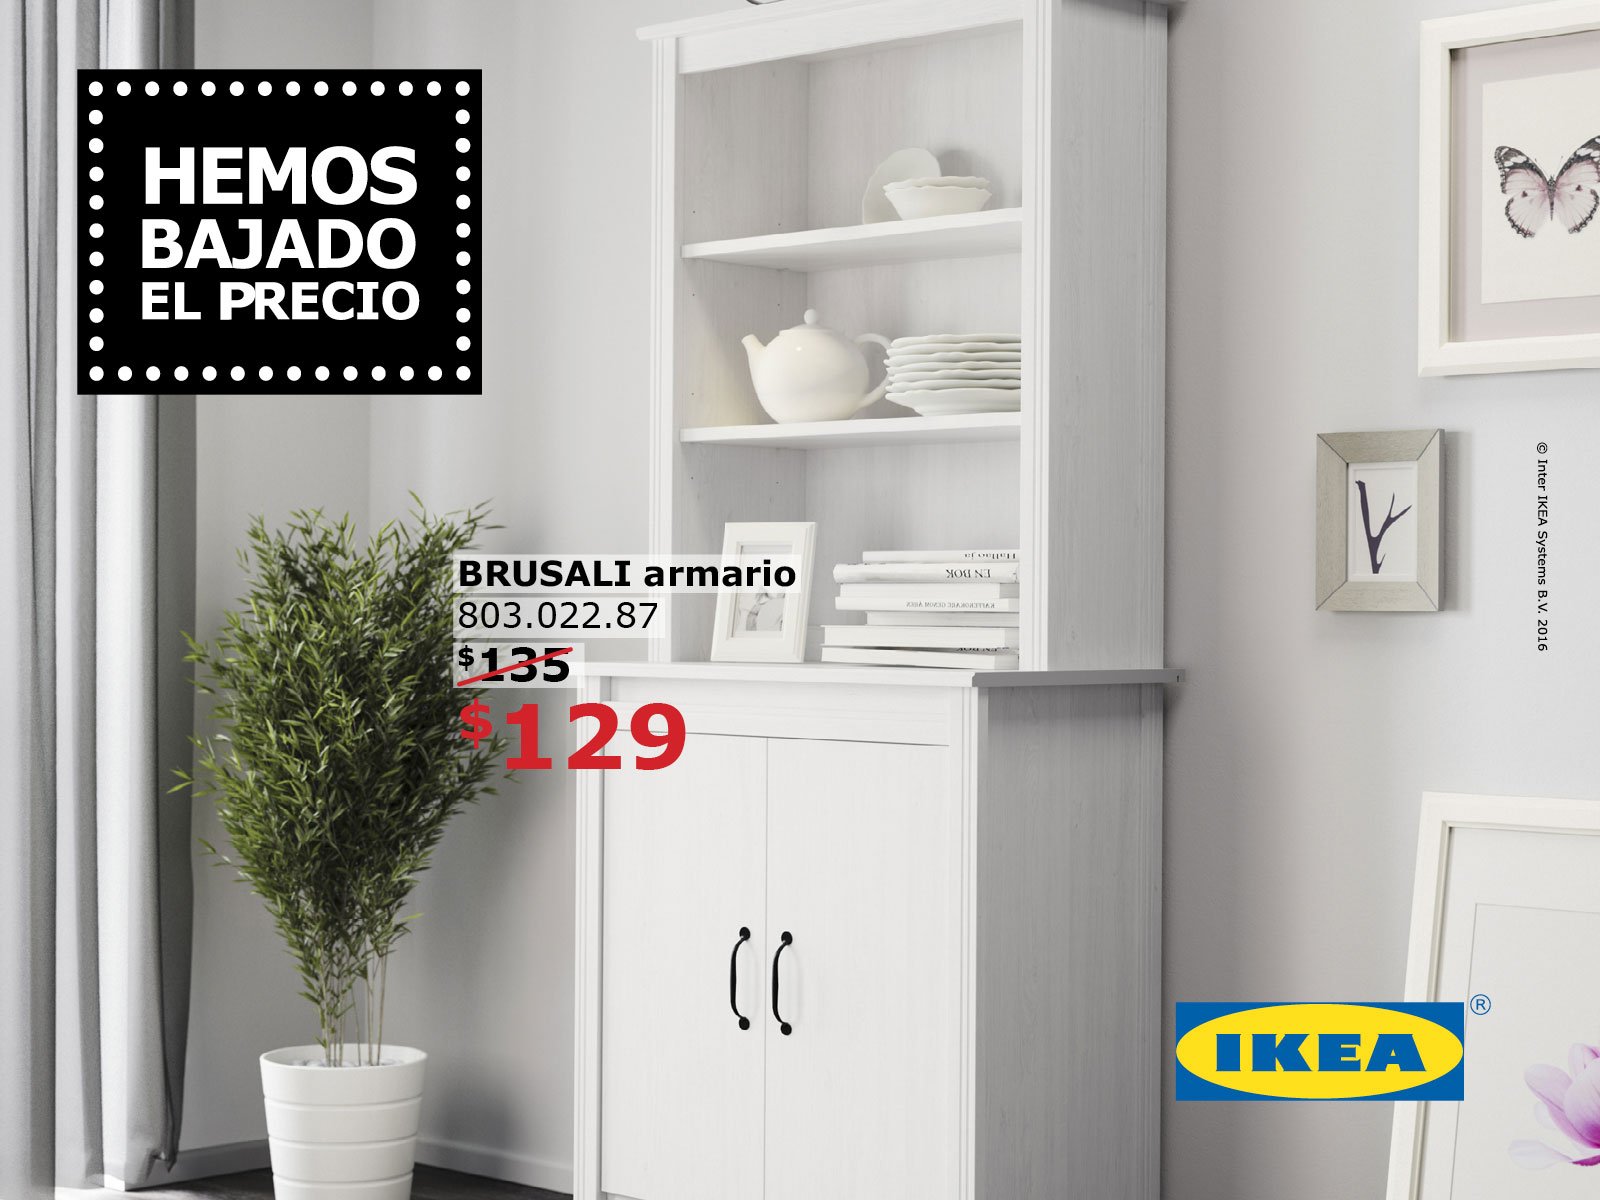 IKEA Puerto Rico on Twitter: "Organiza sala aprovechando que hemos bajado el precio de tu gavetero BRUSALI. Te esperamos en tu Punto IKEA. https://t.co/1eHBjLy3p9" / Twitter